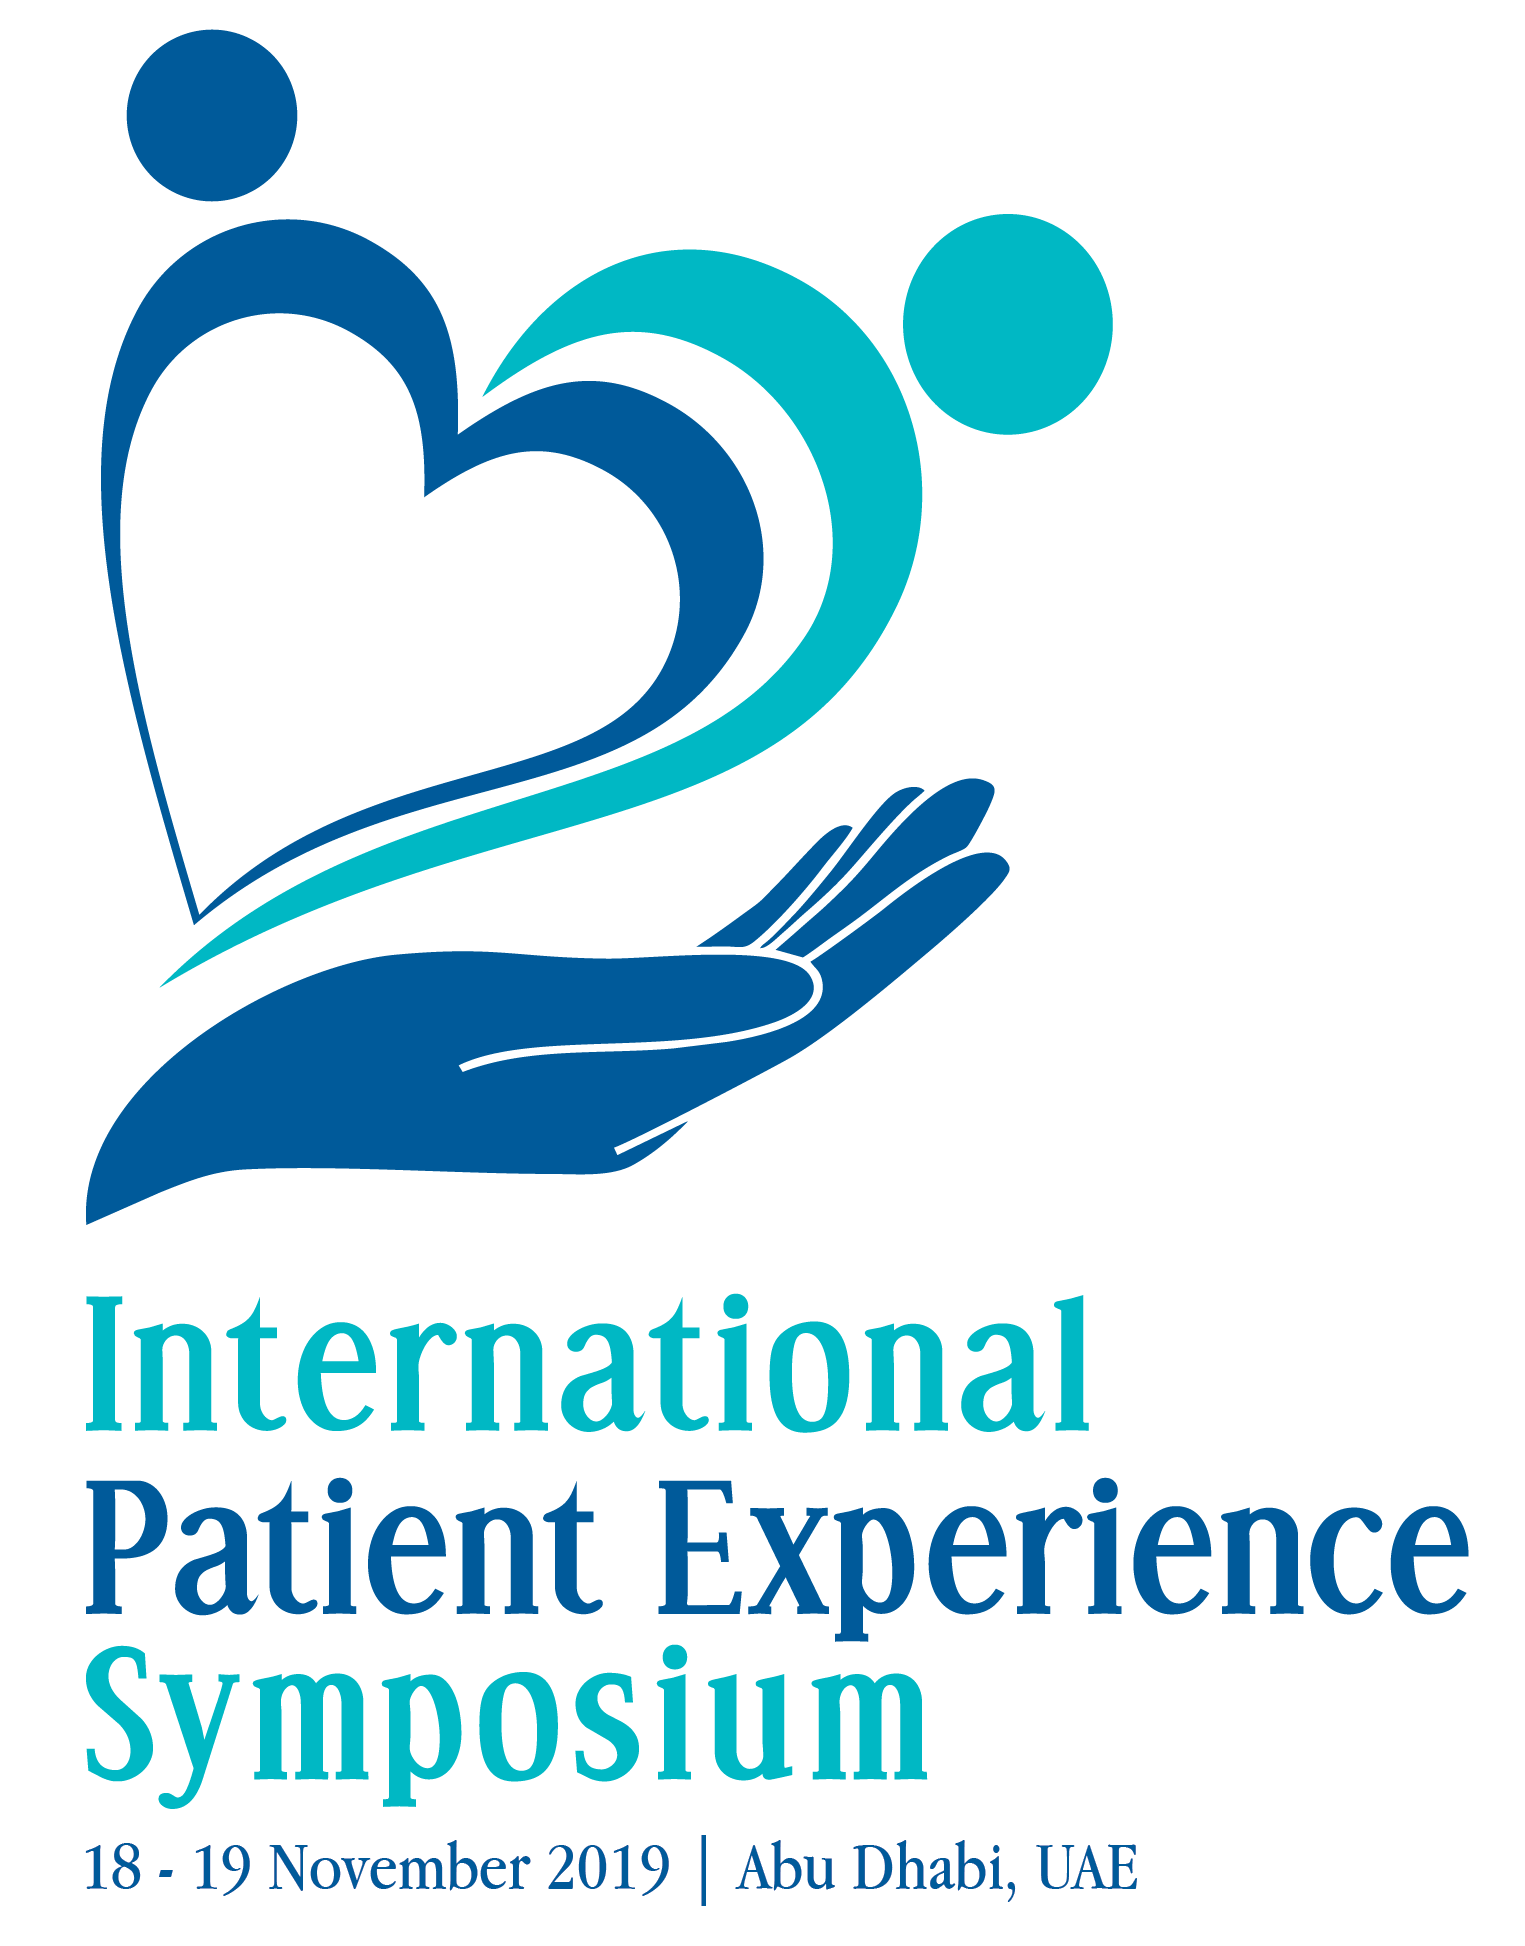 2nd Annual International Patient Experience Symposium, Abu Dhabi, United Arab Emirates